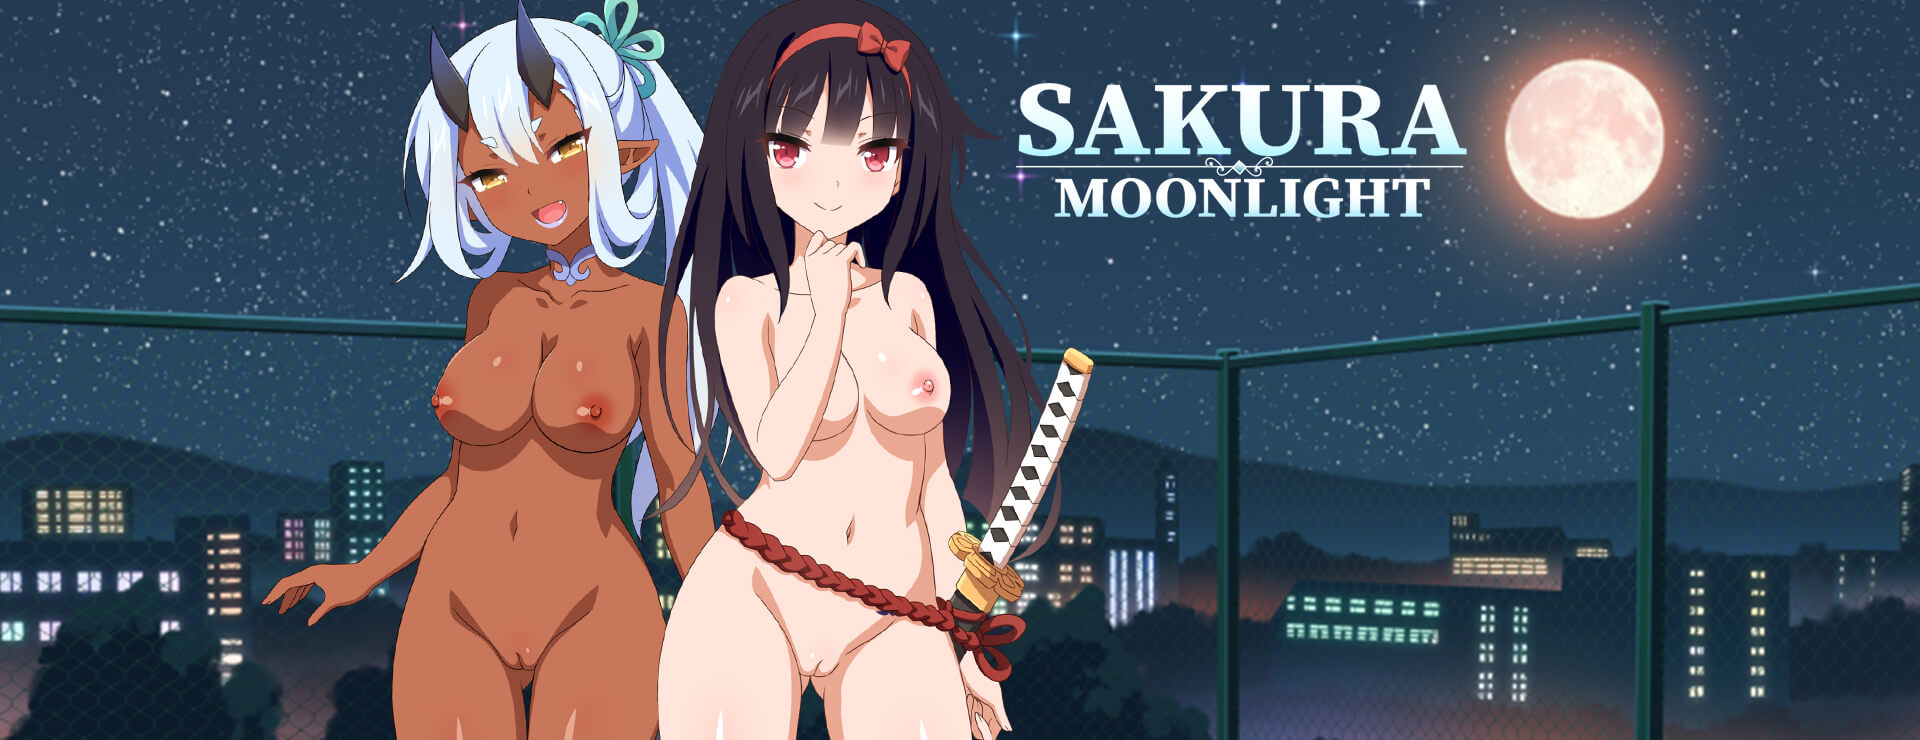 Sakura Moonlight - Novela Visual Juego